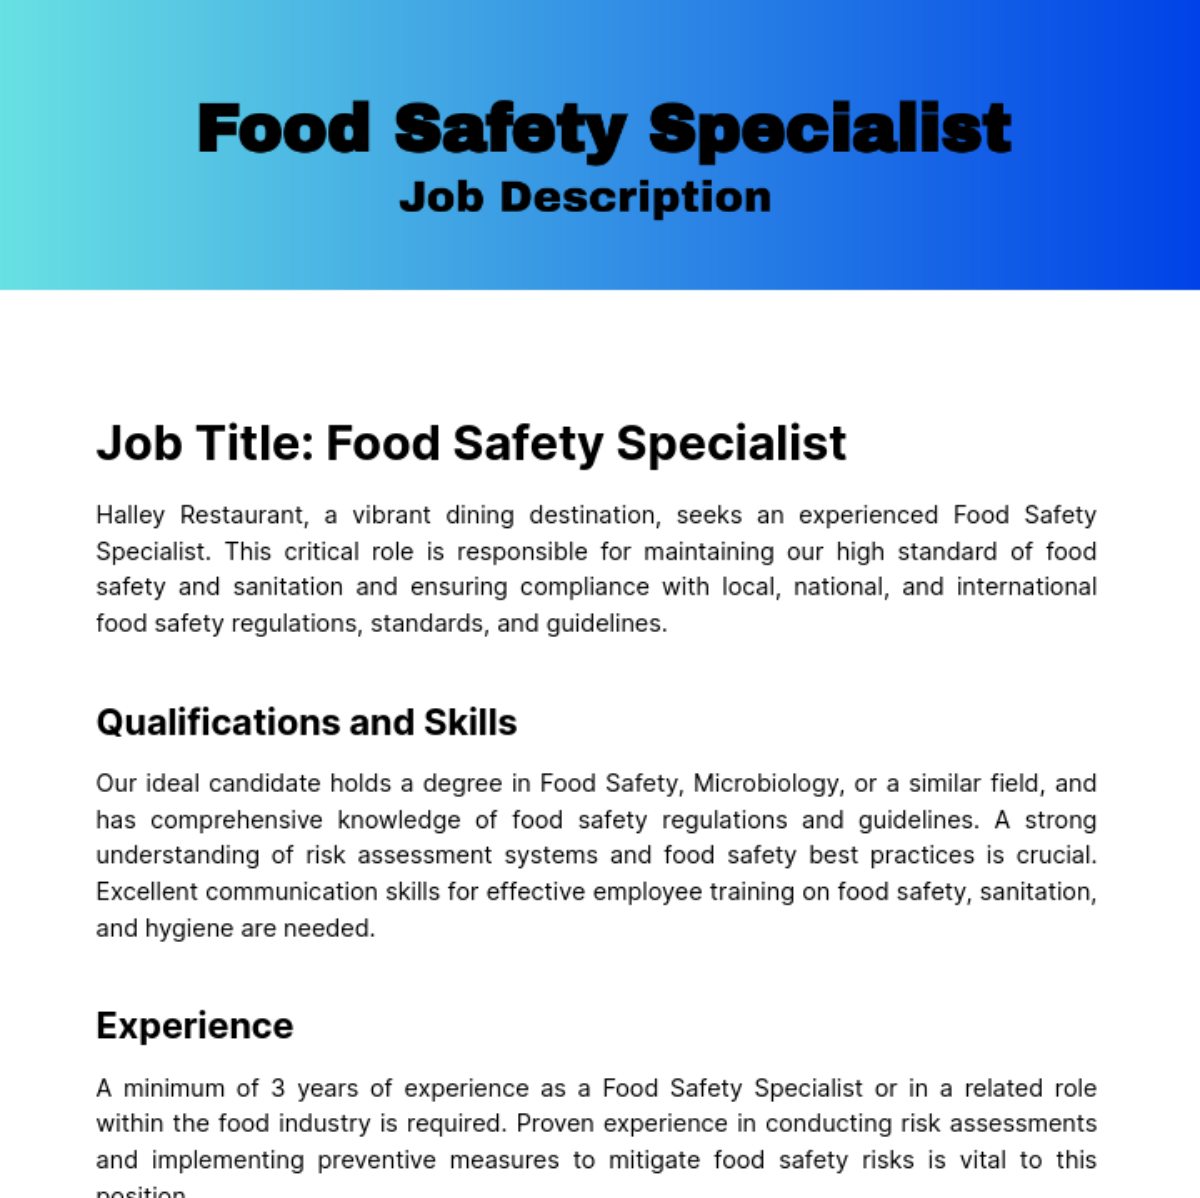 Food Safety Specialist Job Description Template